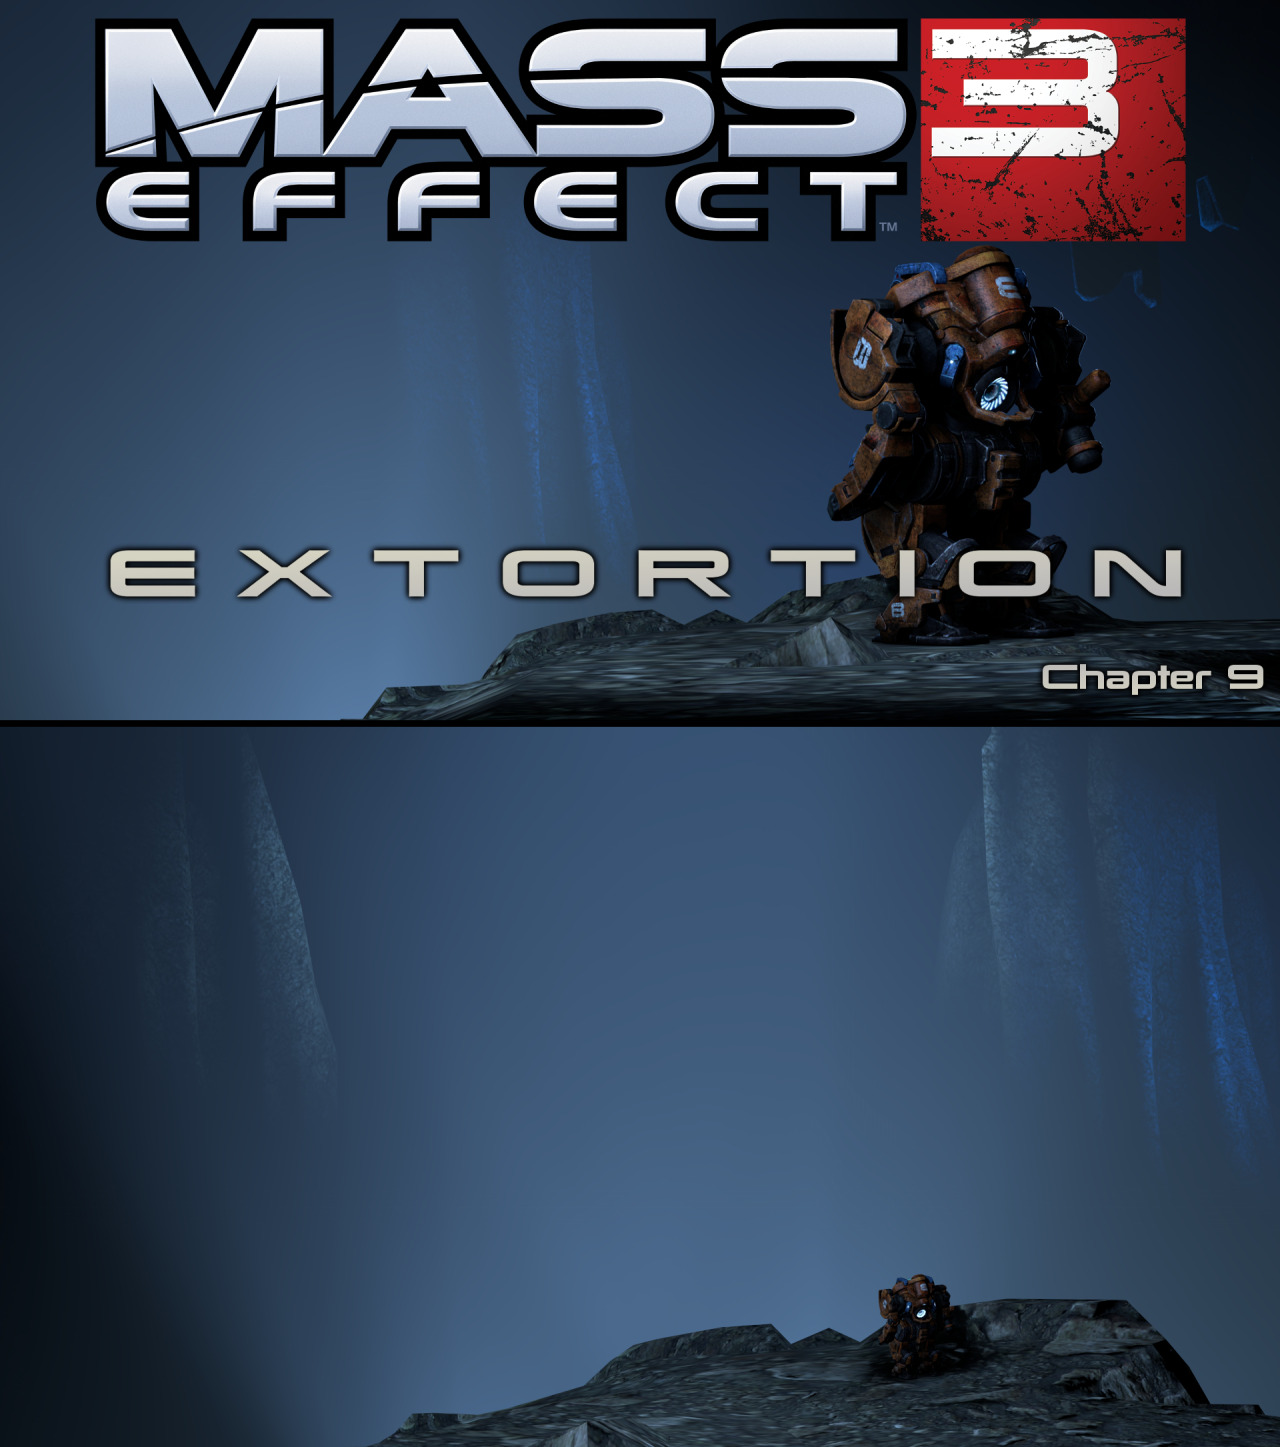 Mass Effect 3: ExtortionChapter 9: 2181 Despoina1920 x 1080 renders: http://www.mediafire.com/download/kq5bqcc65sepy49/Extortion